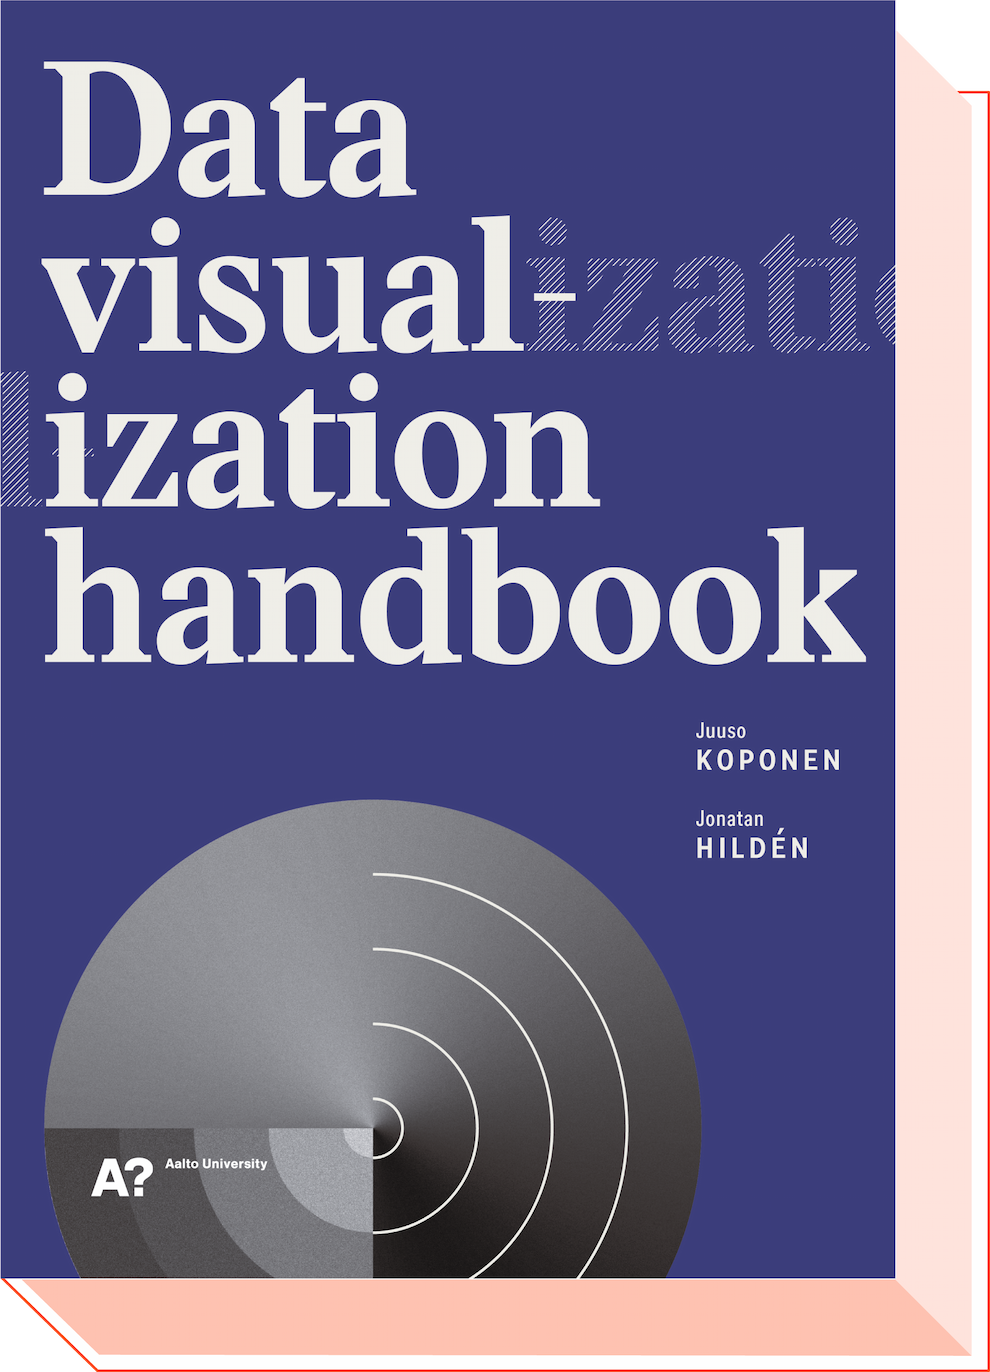 isometric illustration of Data visualization handbook cover